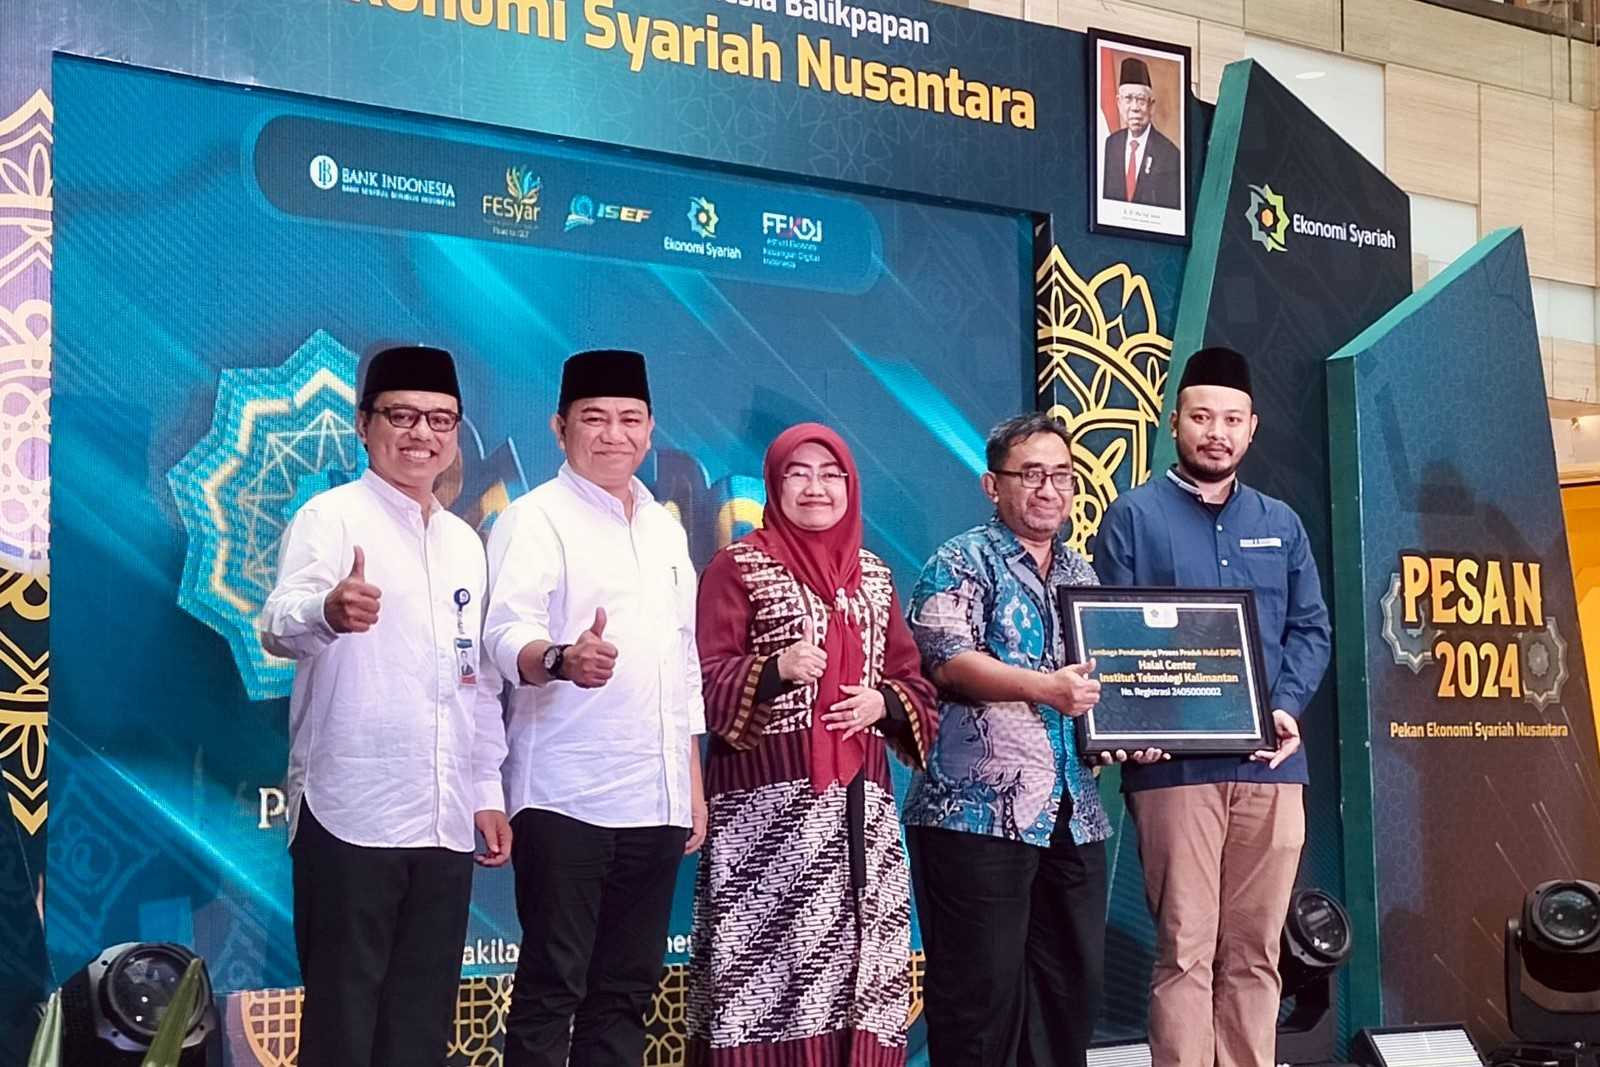 Dorong Ekonomi Daerah Melalui 'Halal Value Chain', BI Balikpapan Gelar Pekan Ekonomi Syariah Nusantara